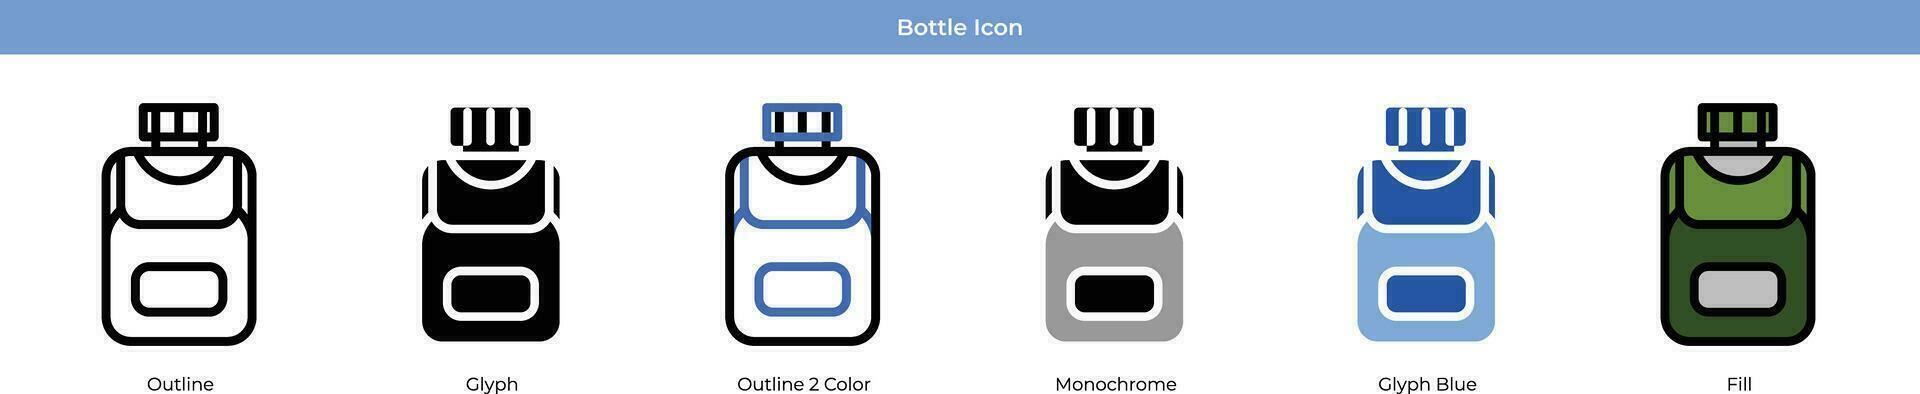 Bottle Icon Set Vector